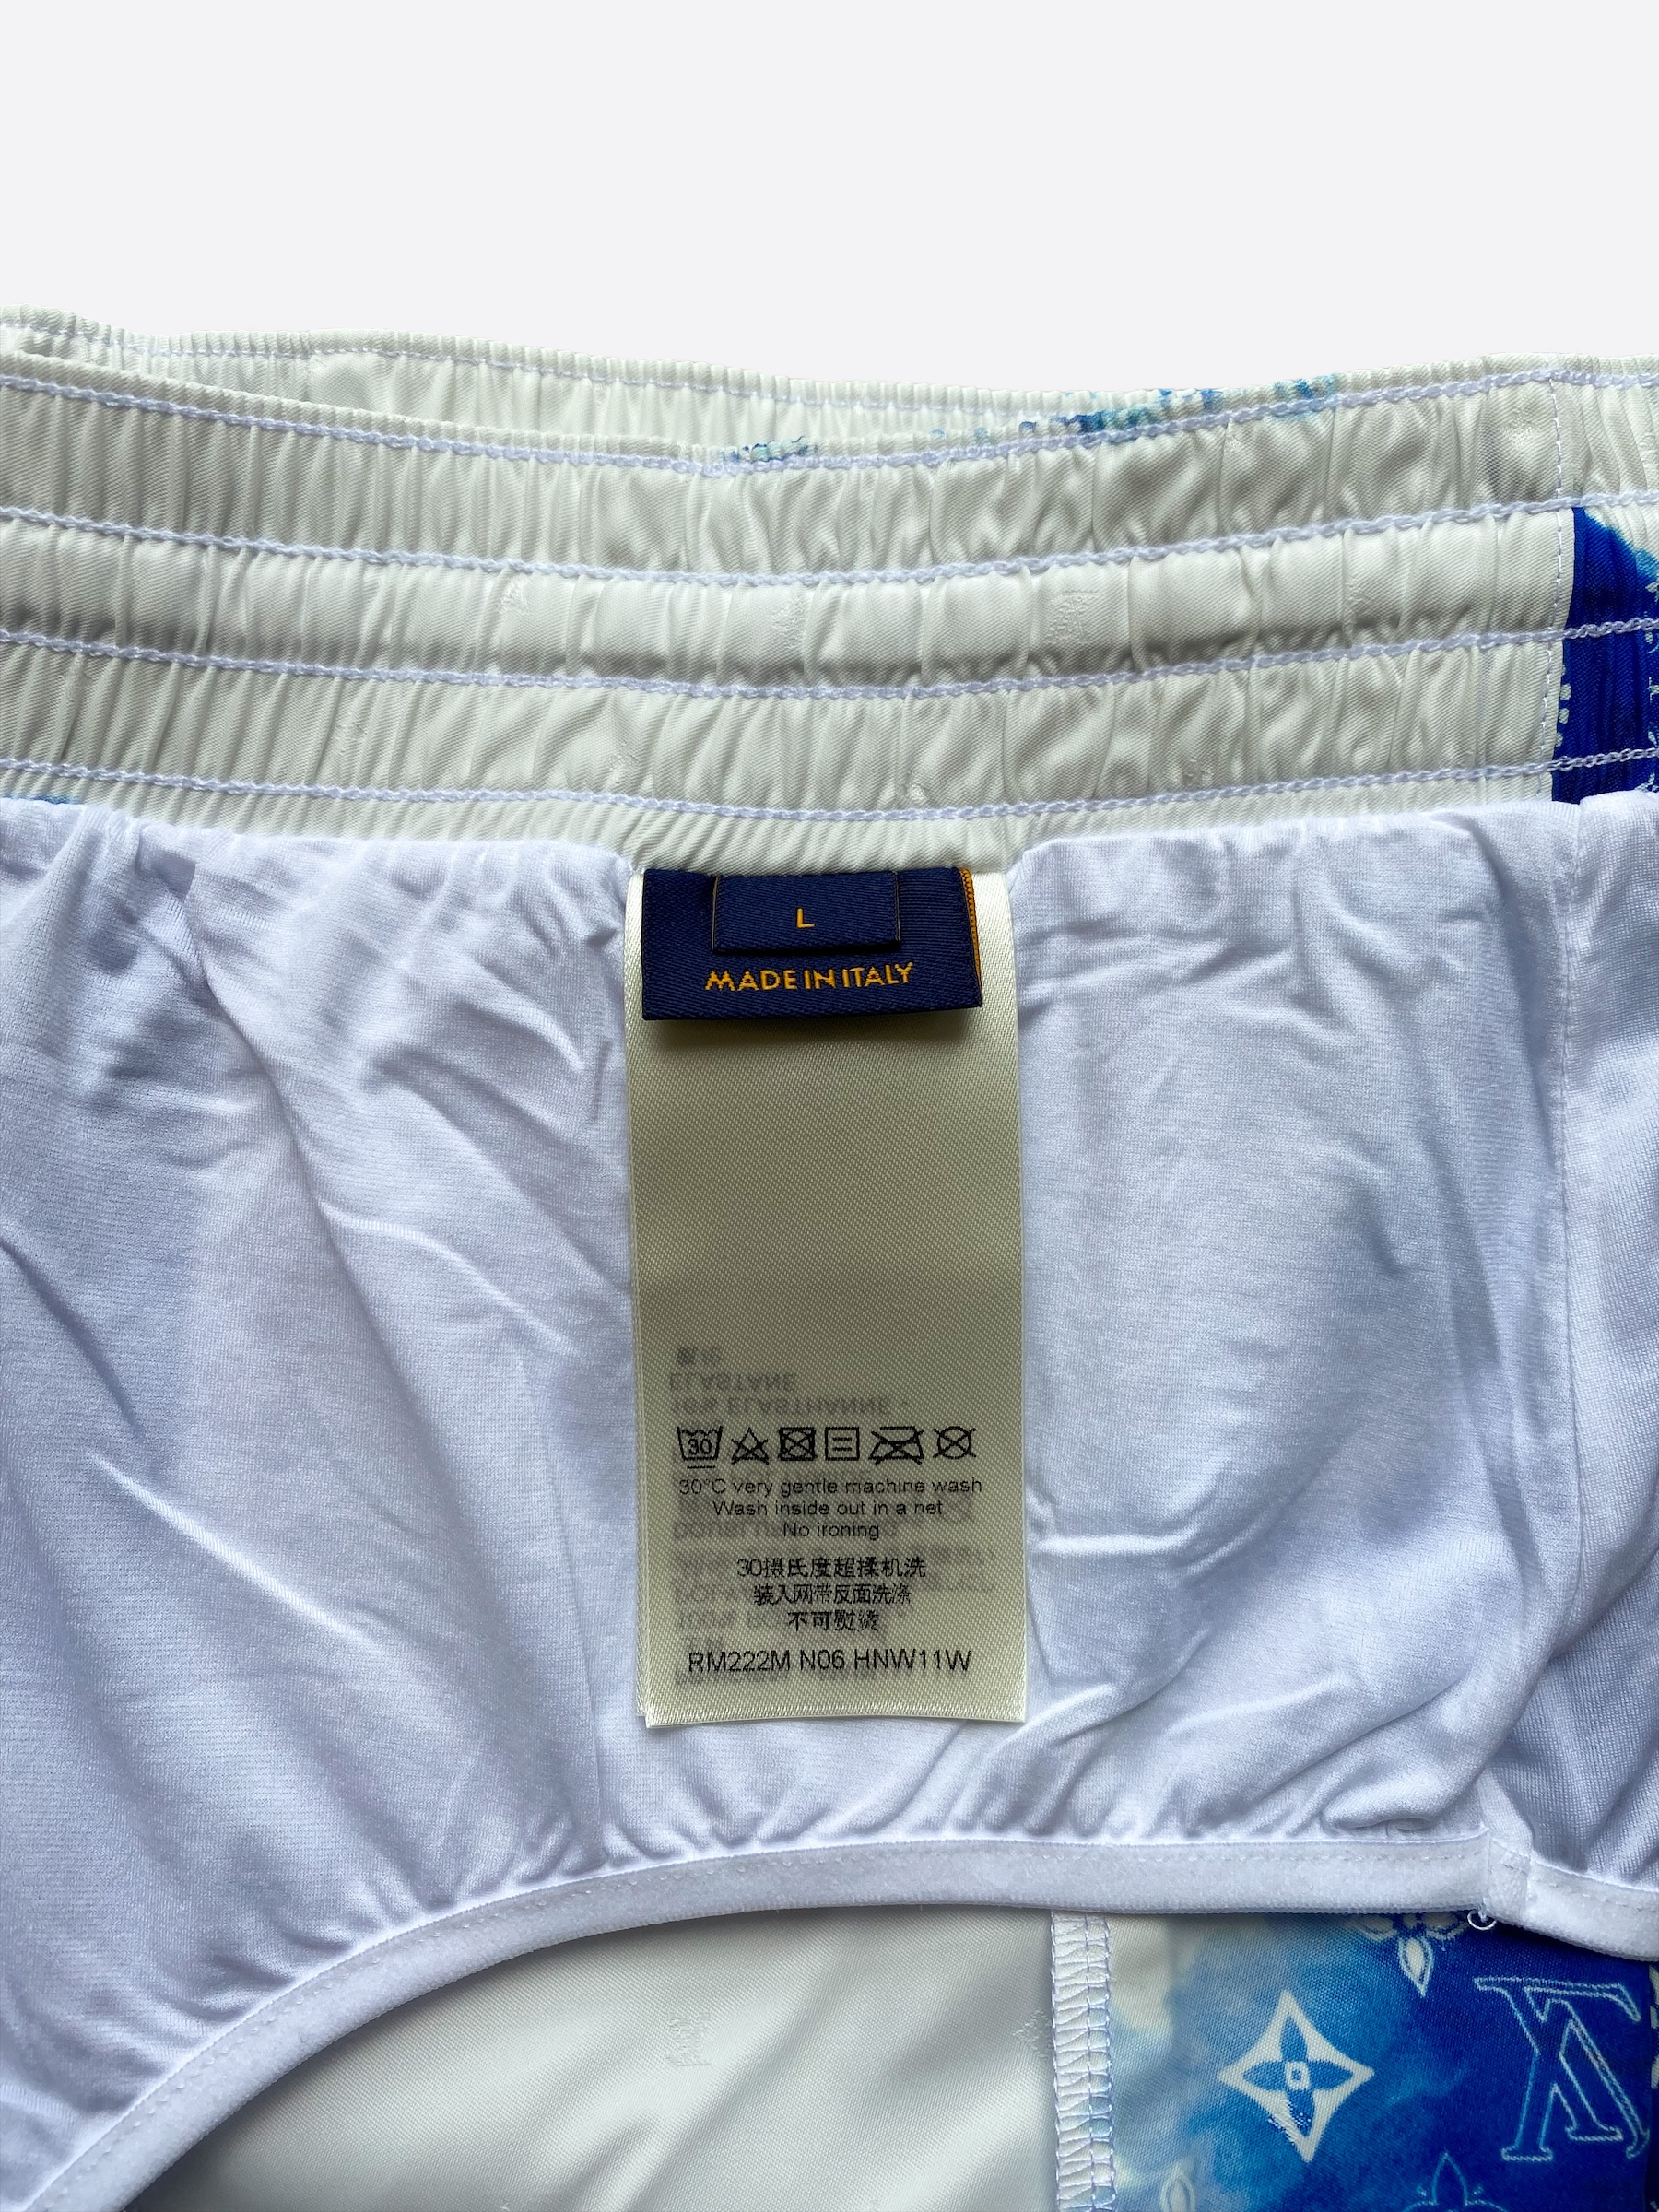 Louis Vuitton Monogram Bandana Shorts